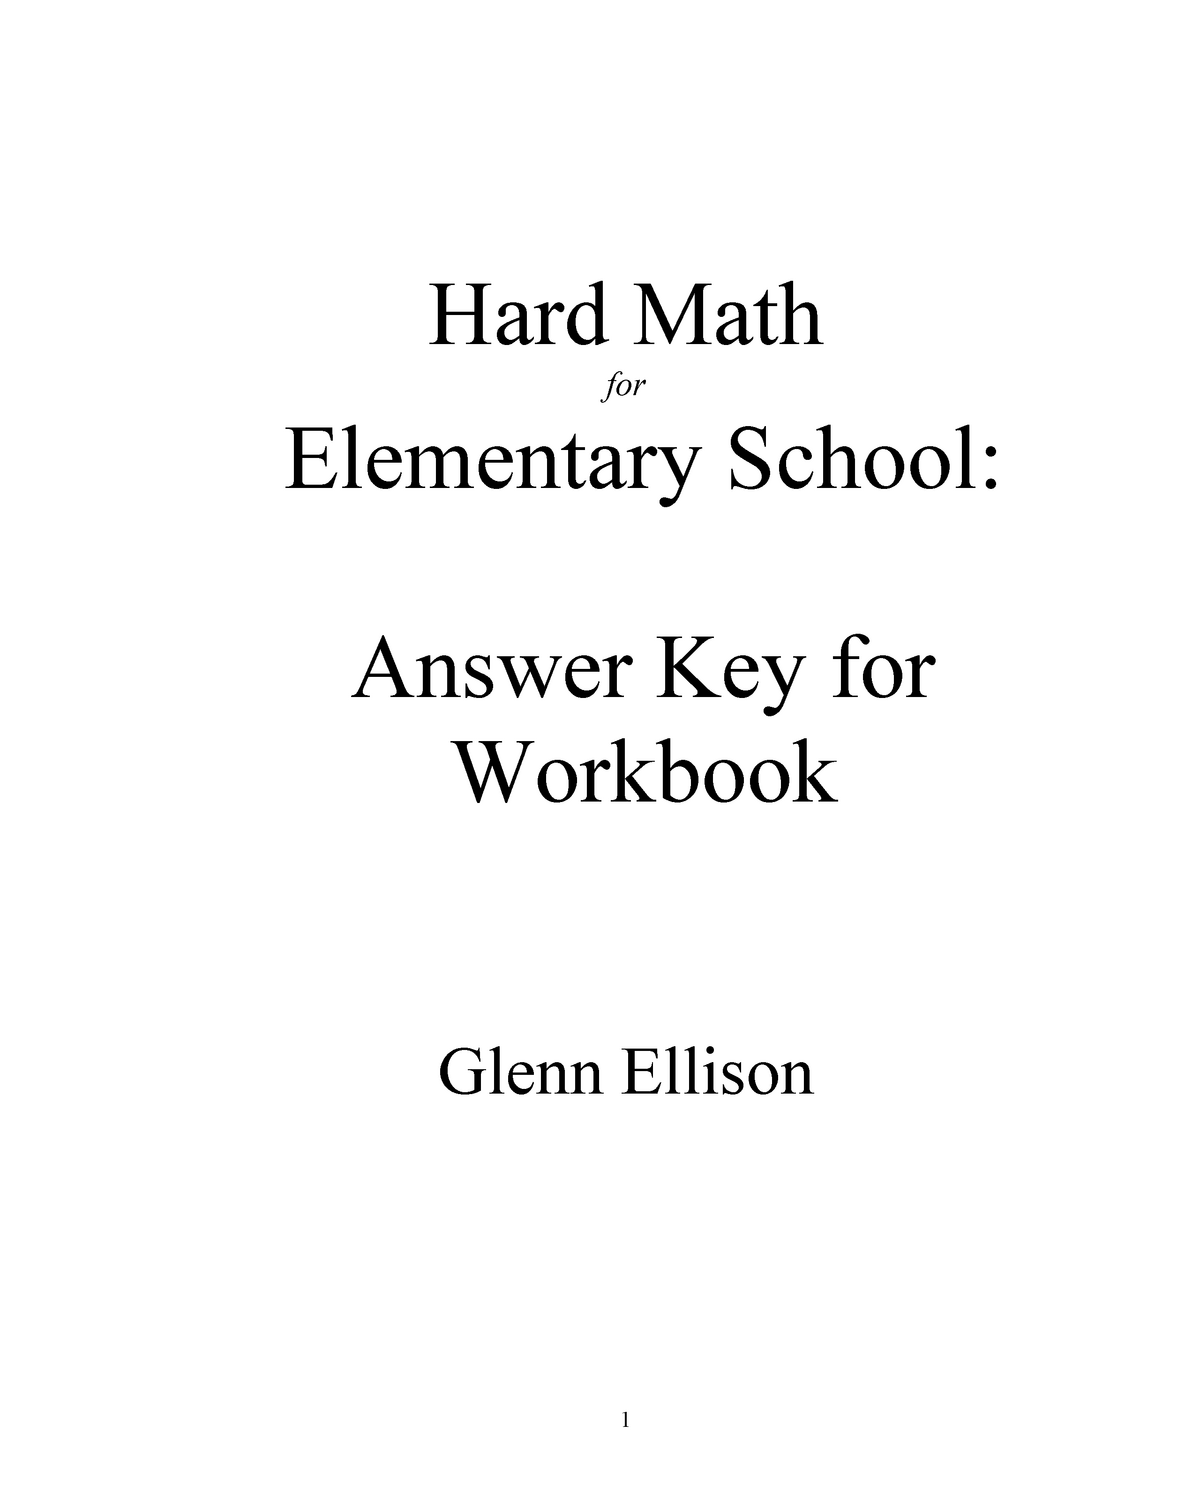 hard-math-for-students-answer-key-for-workbook-glenn-ellison-1-hard-math-for-elementary-school